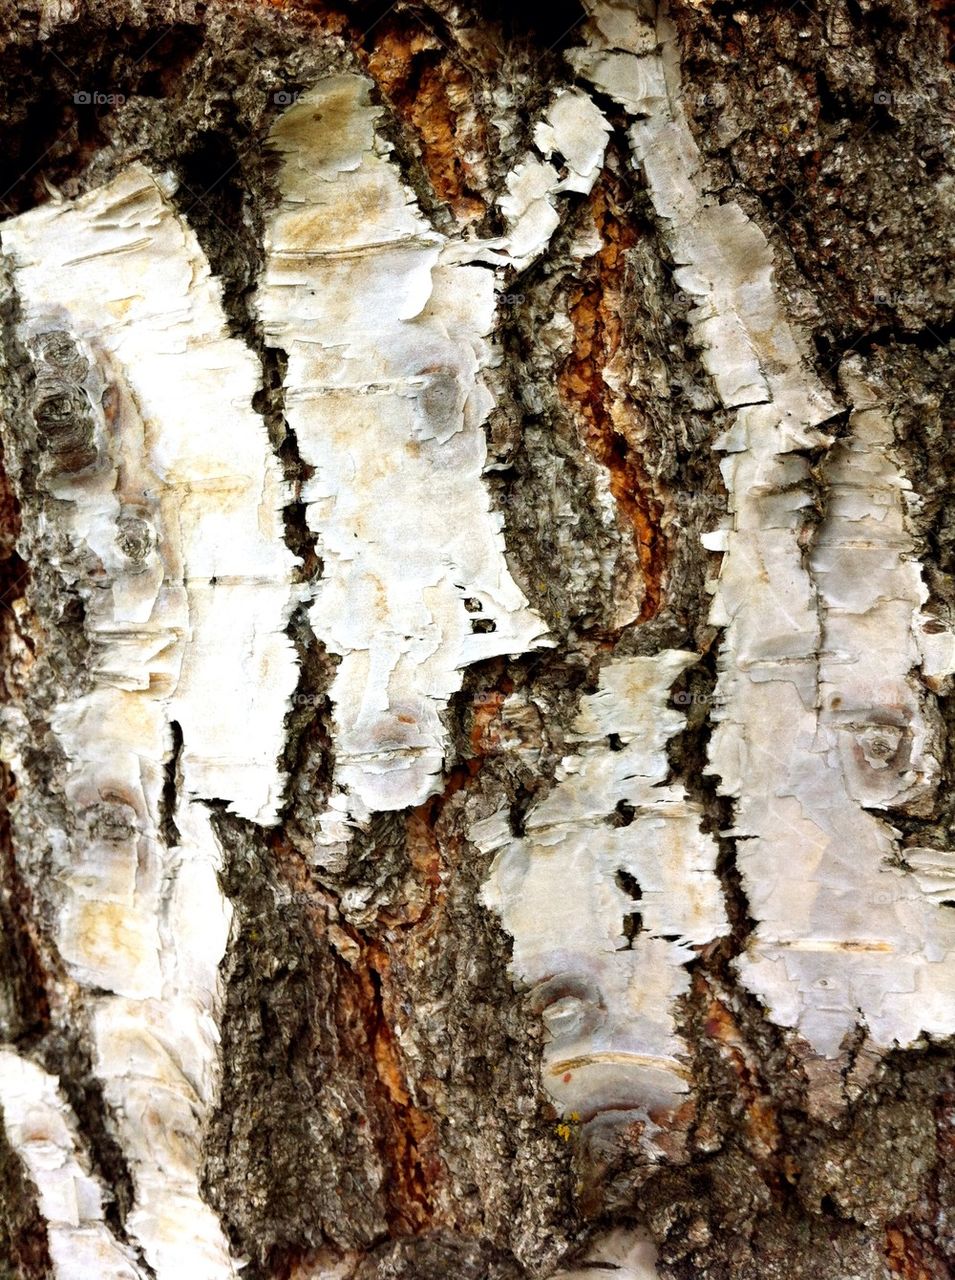 Birch stem with patterned bark.